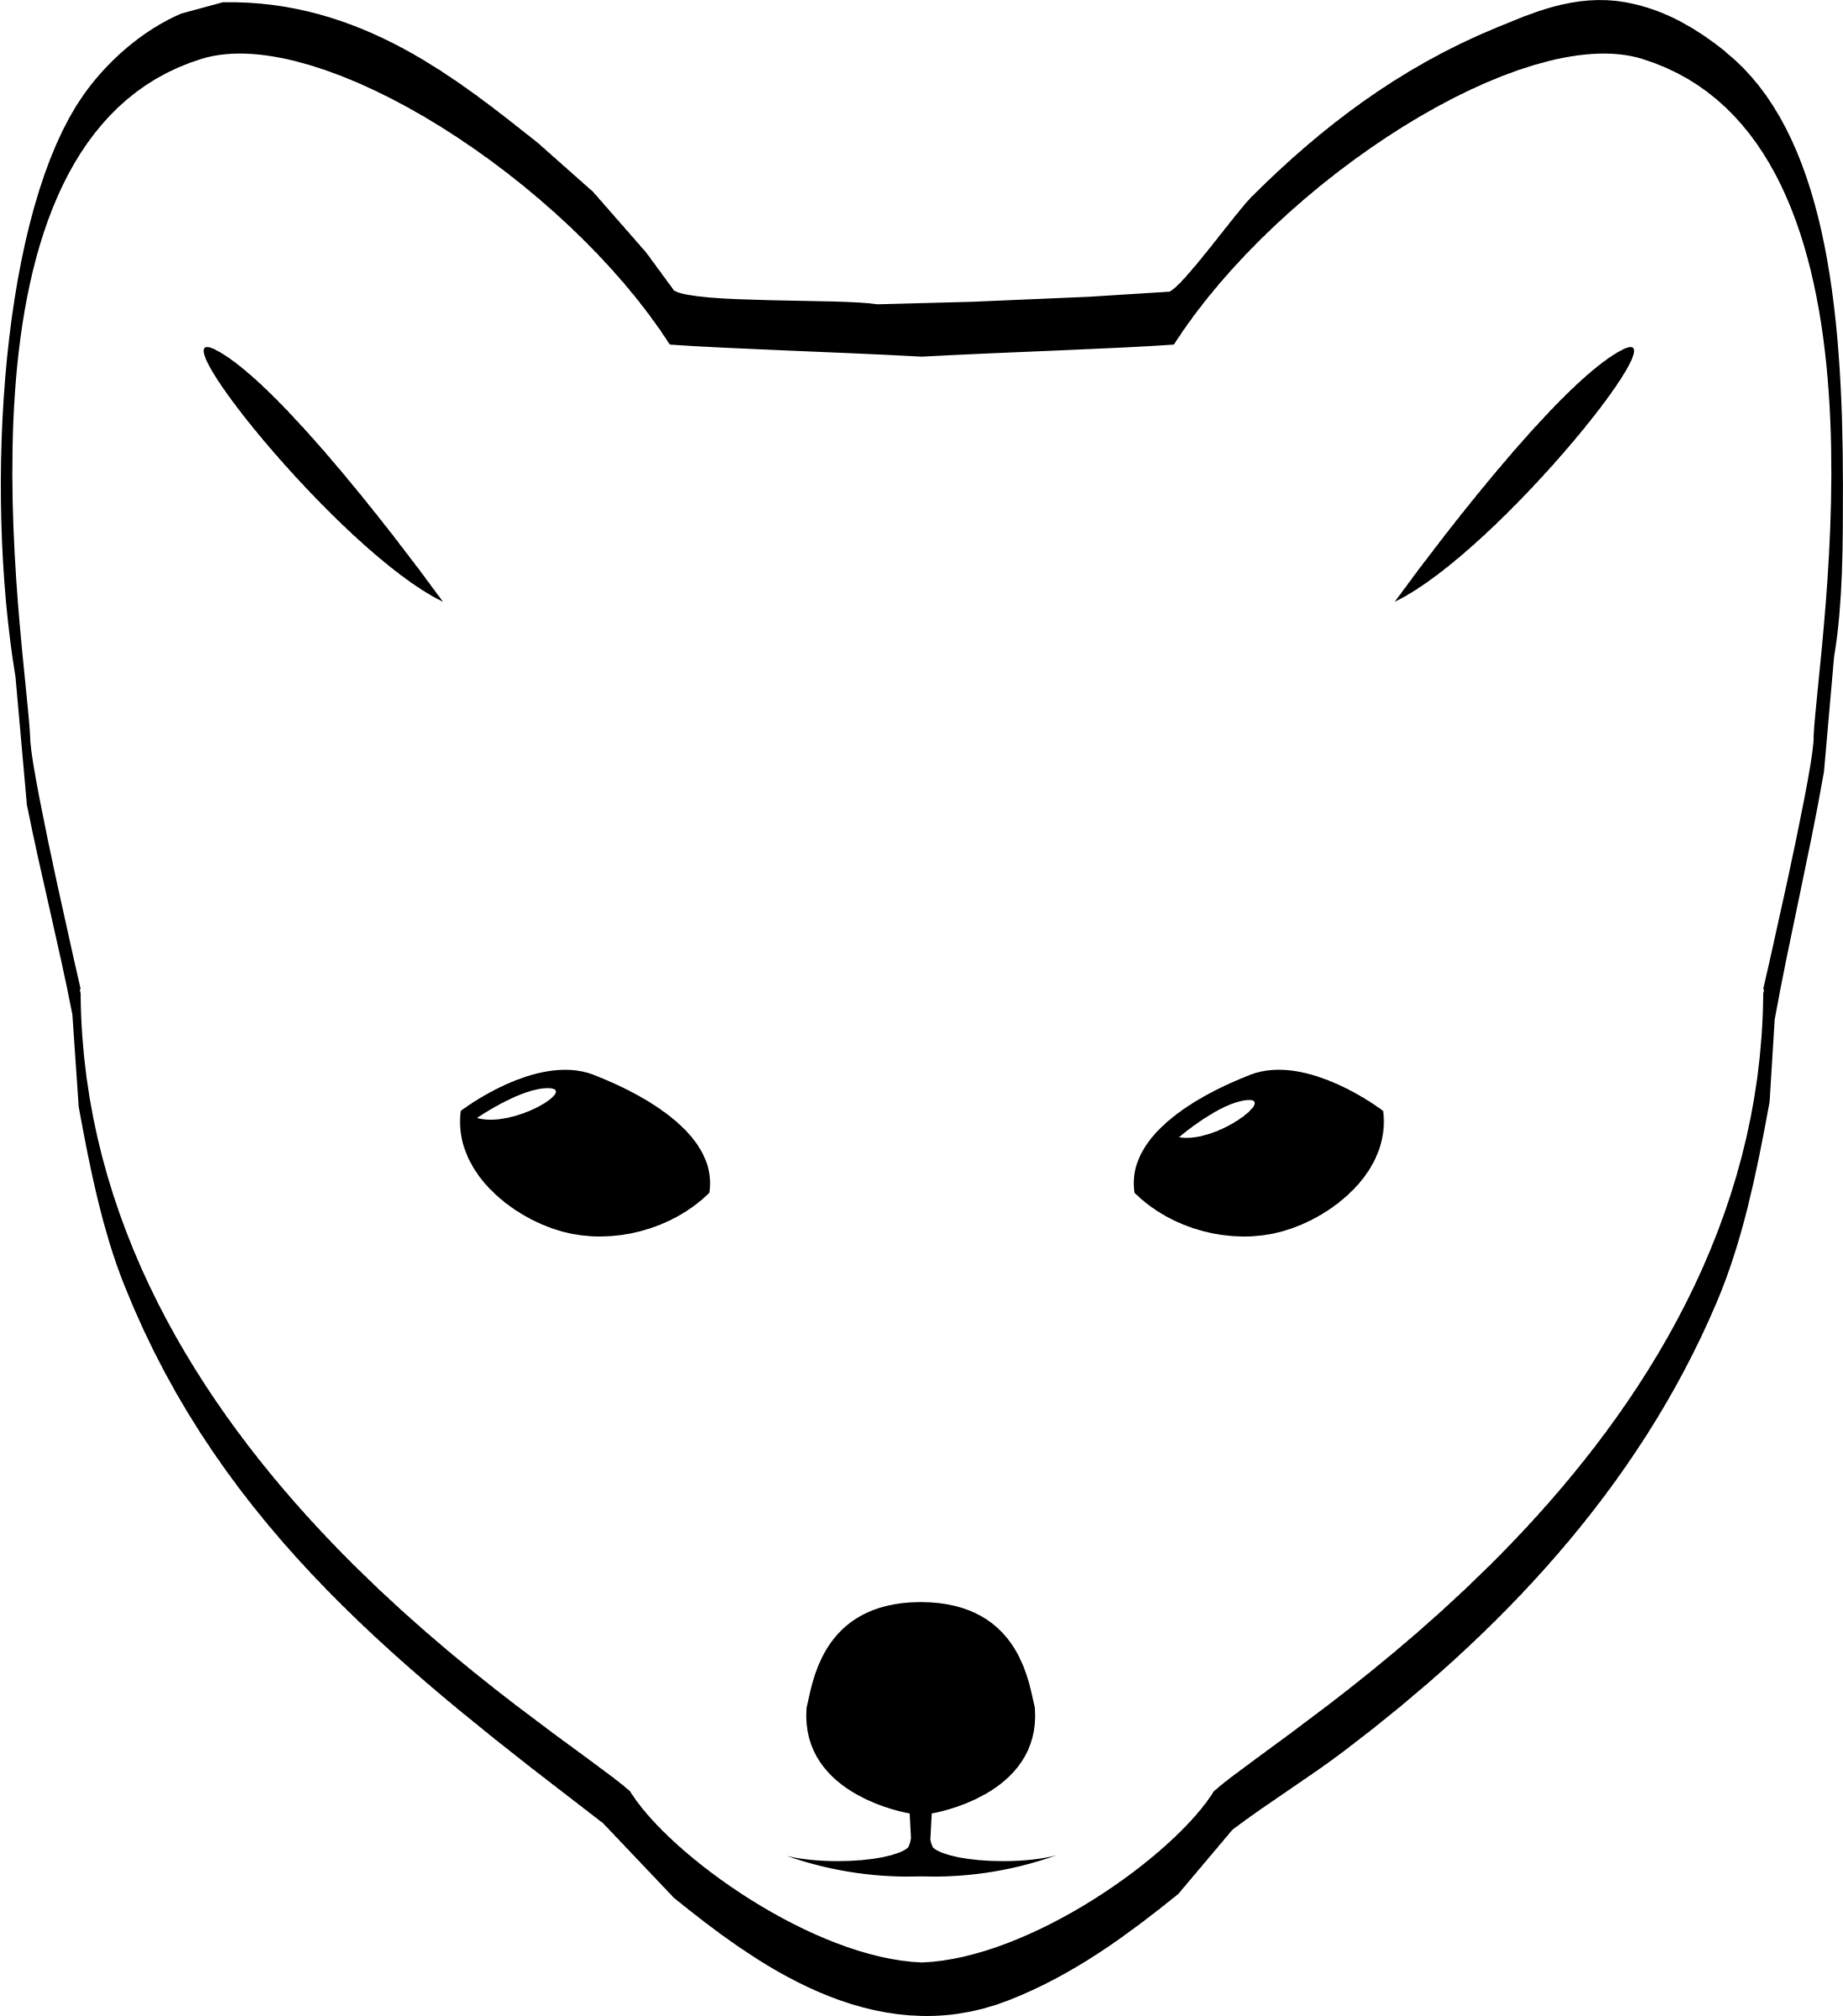 Fox head clipart black and white